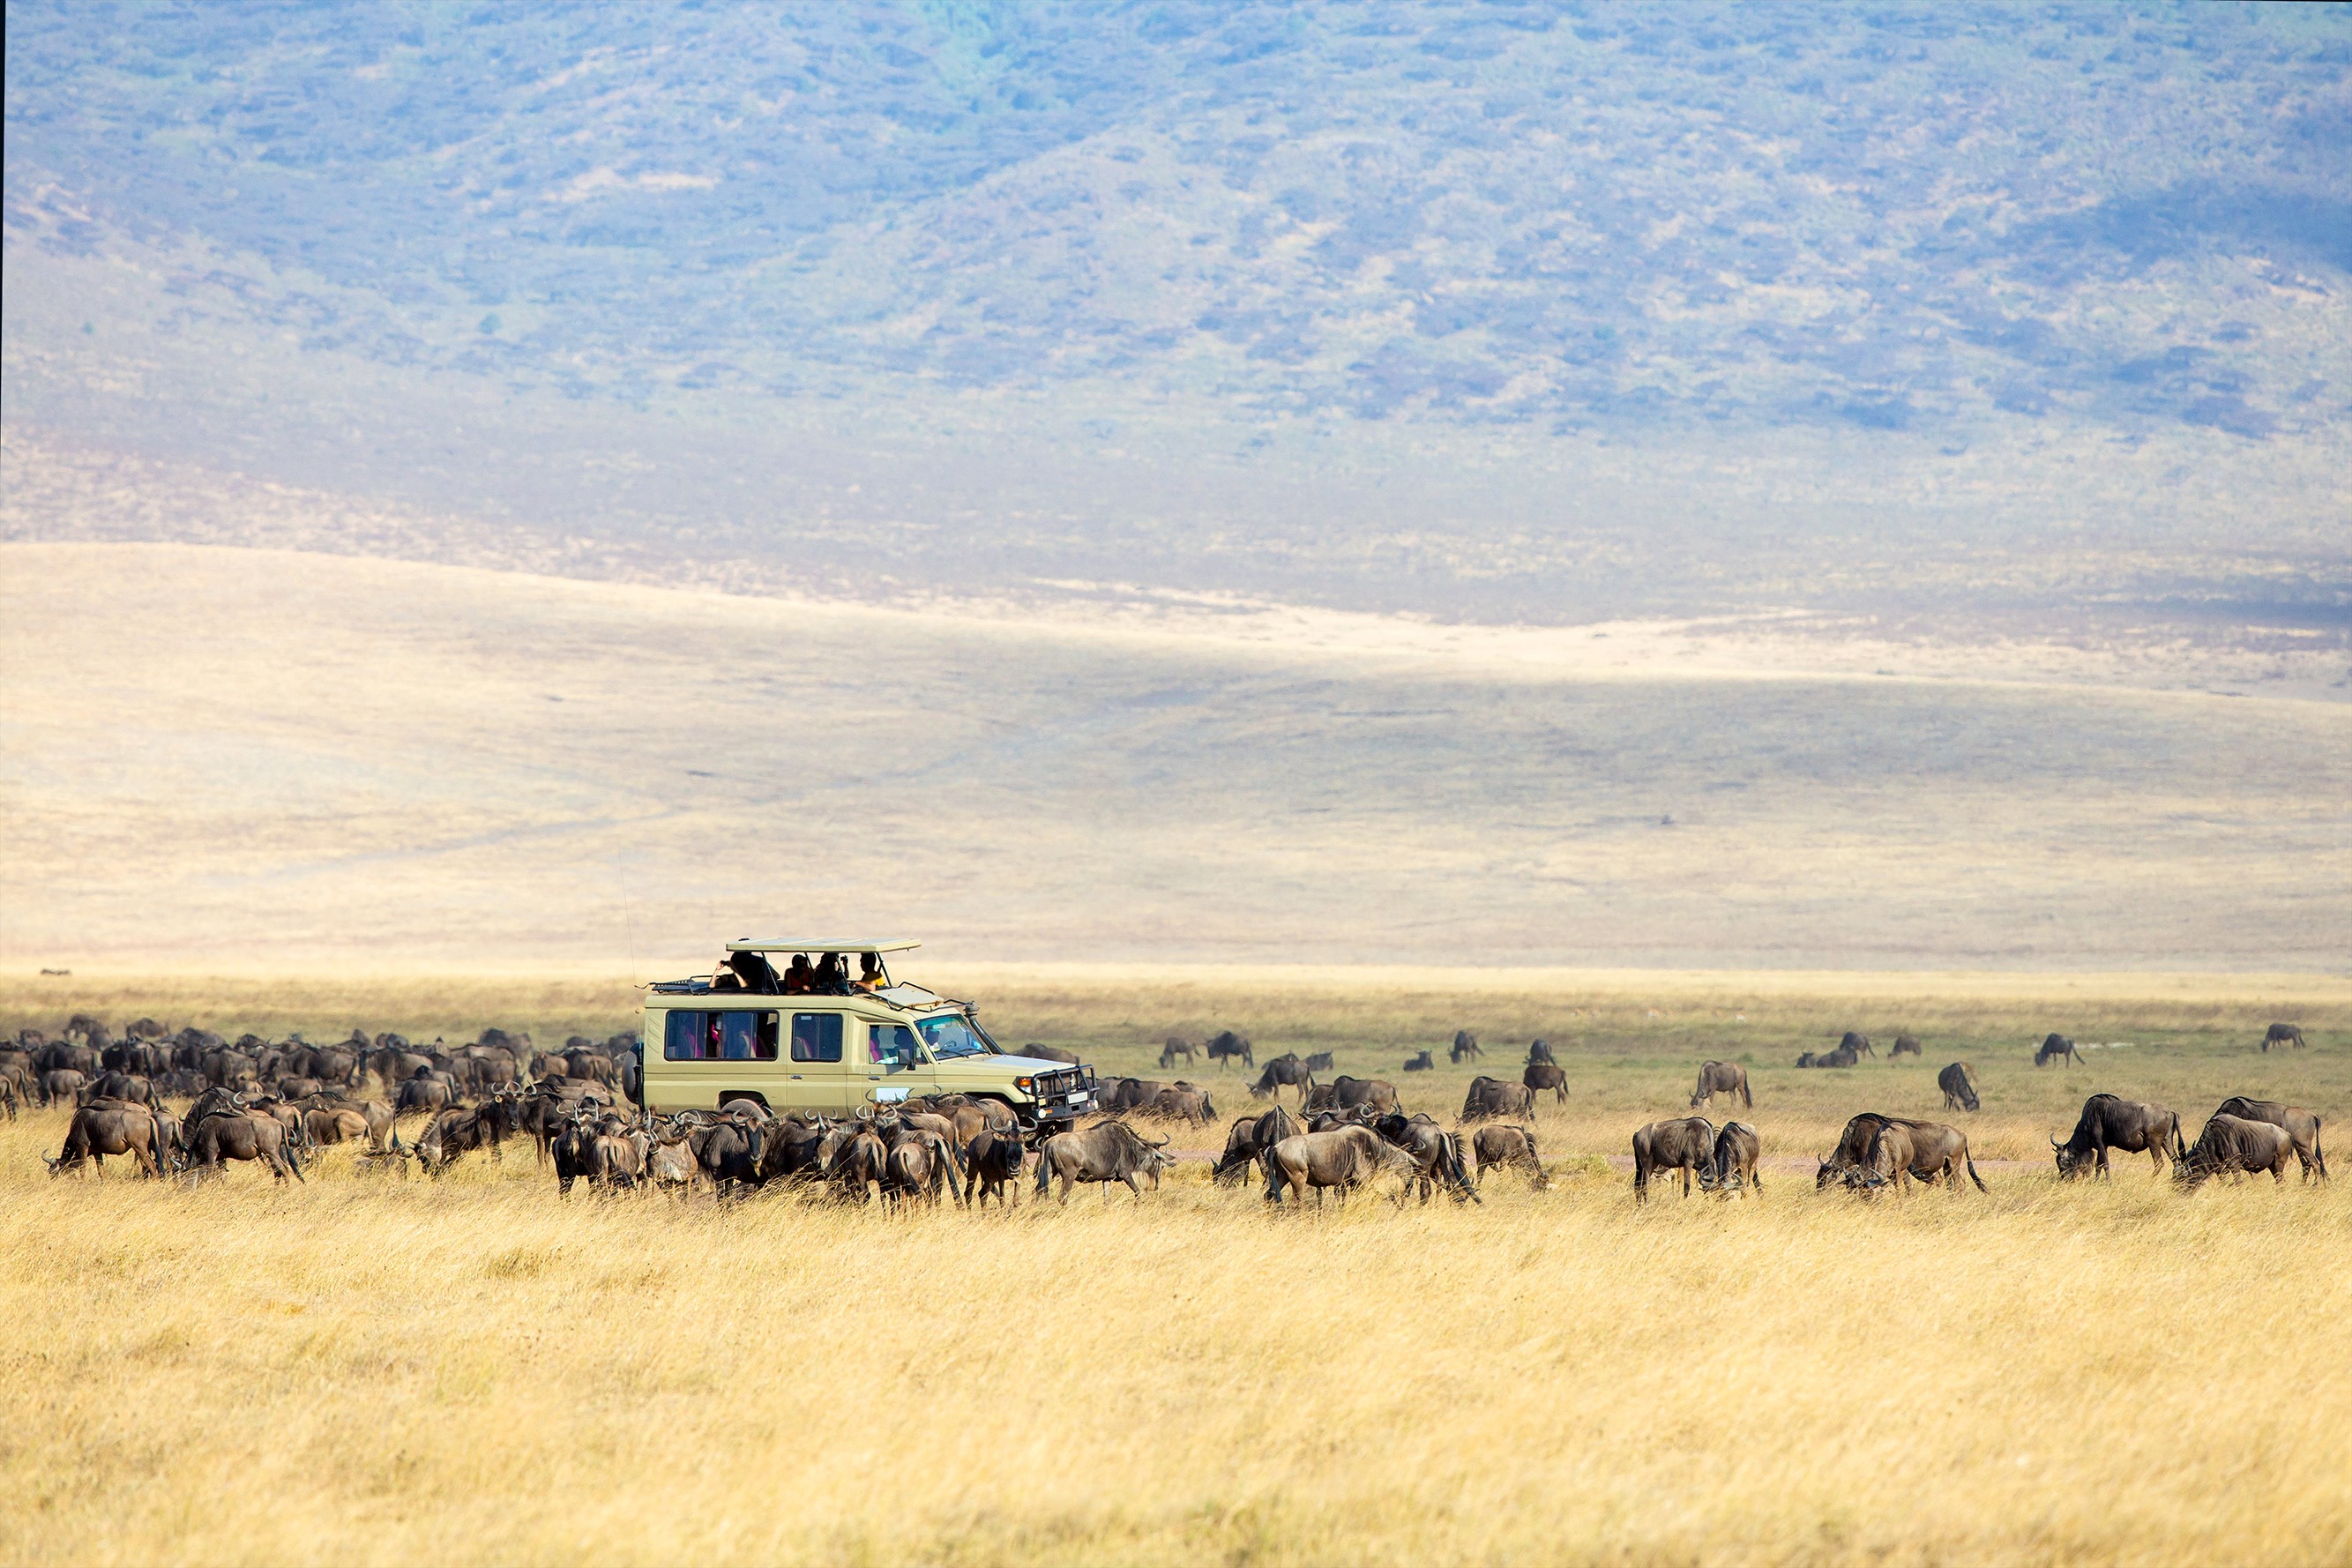 tips voor safari kenia